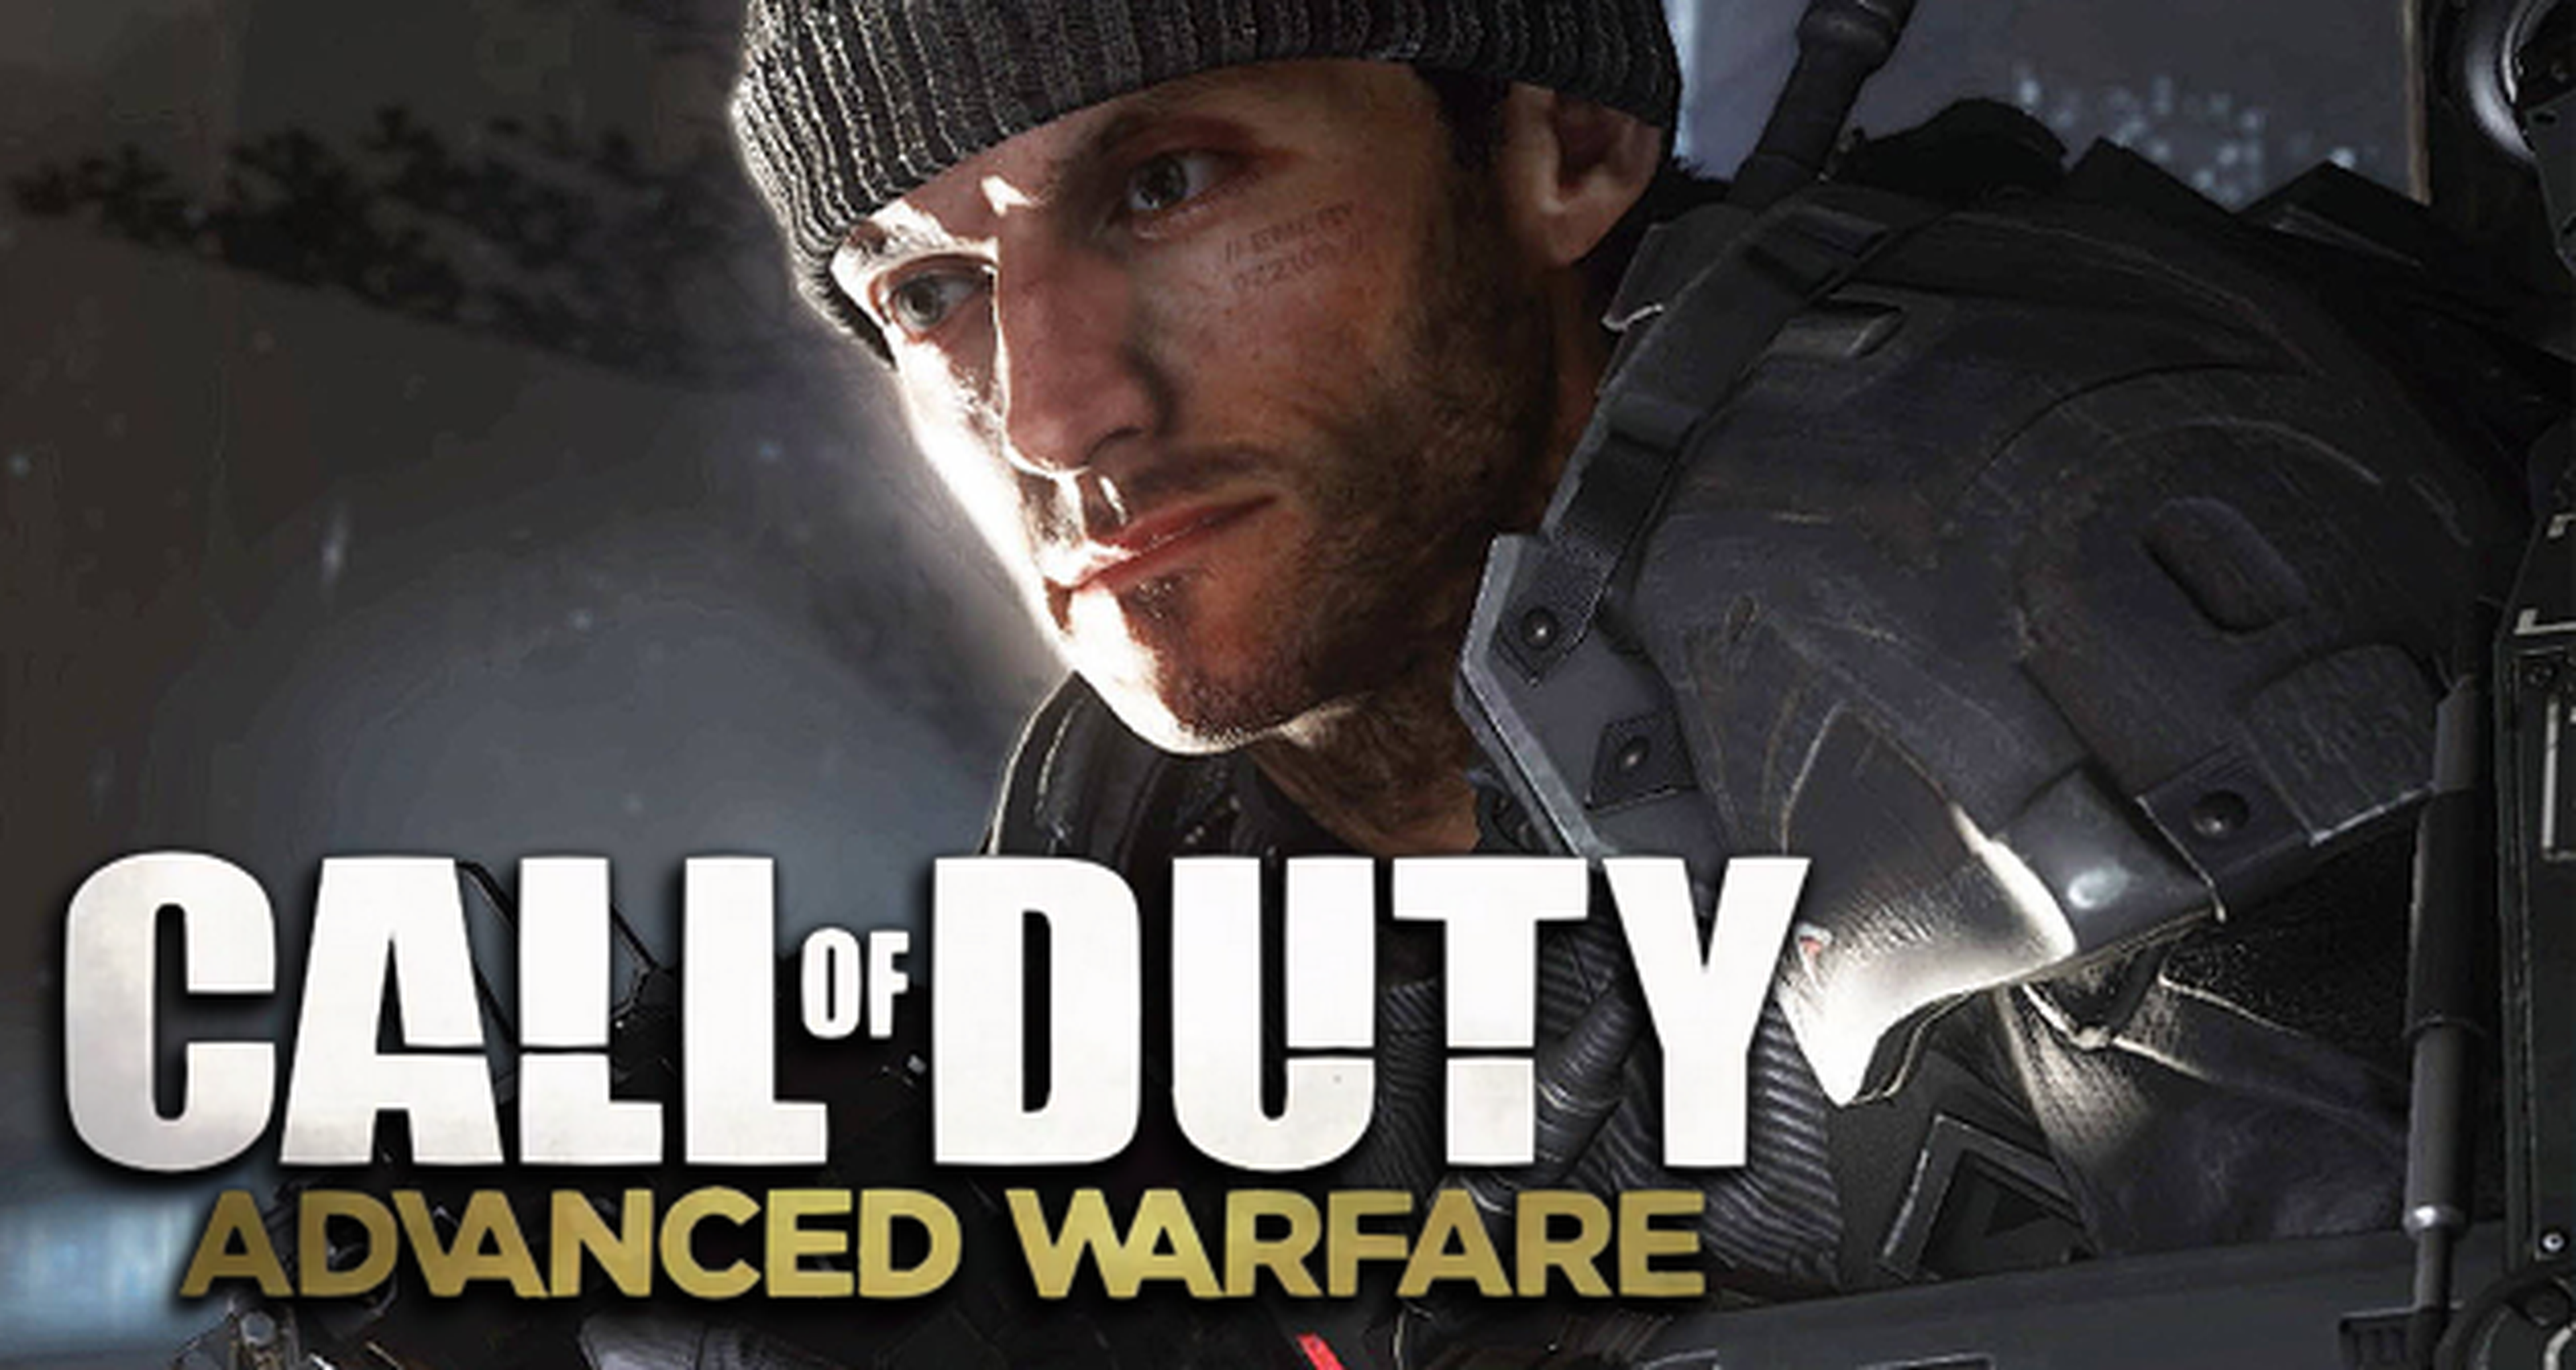 Análisis de Call of Duty Advanced Warfare